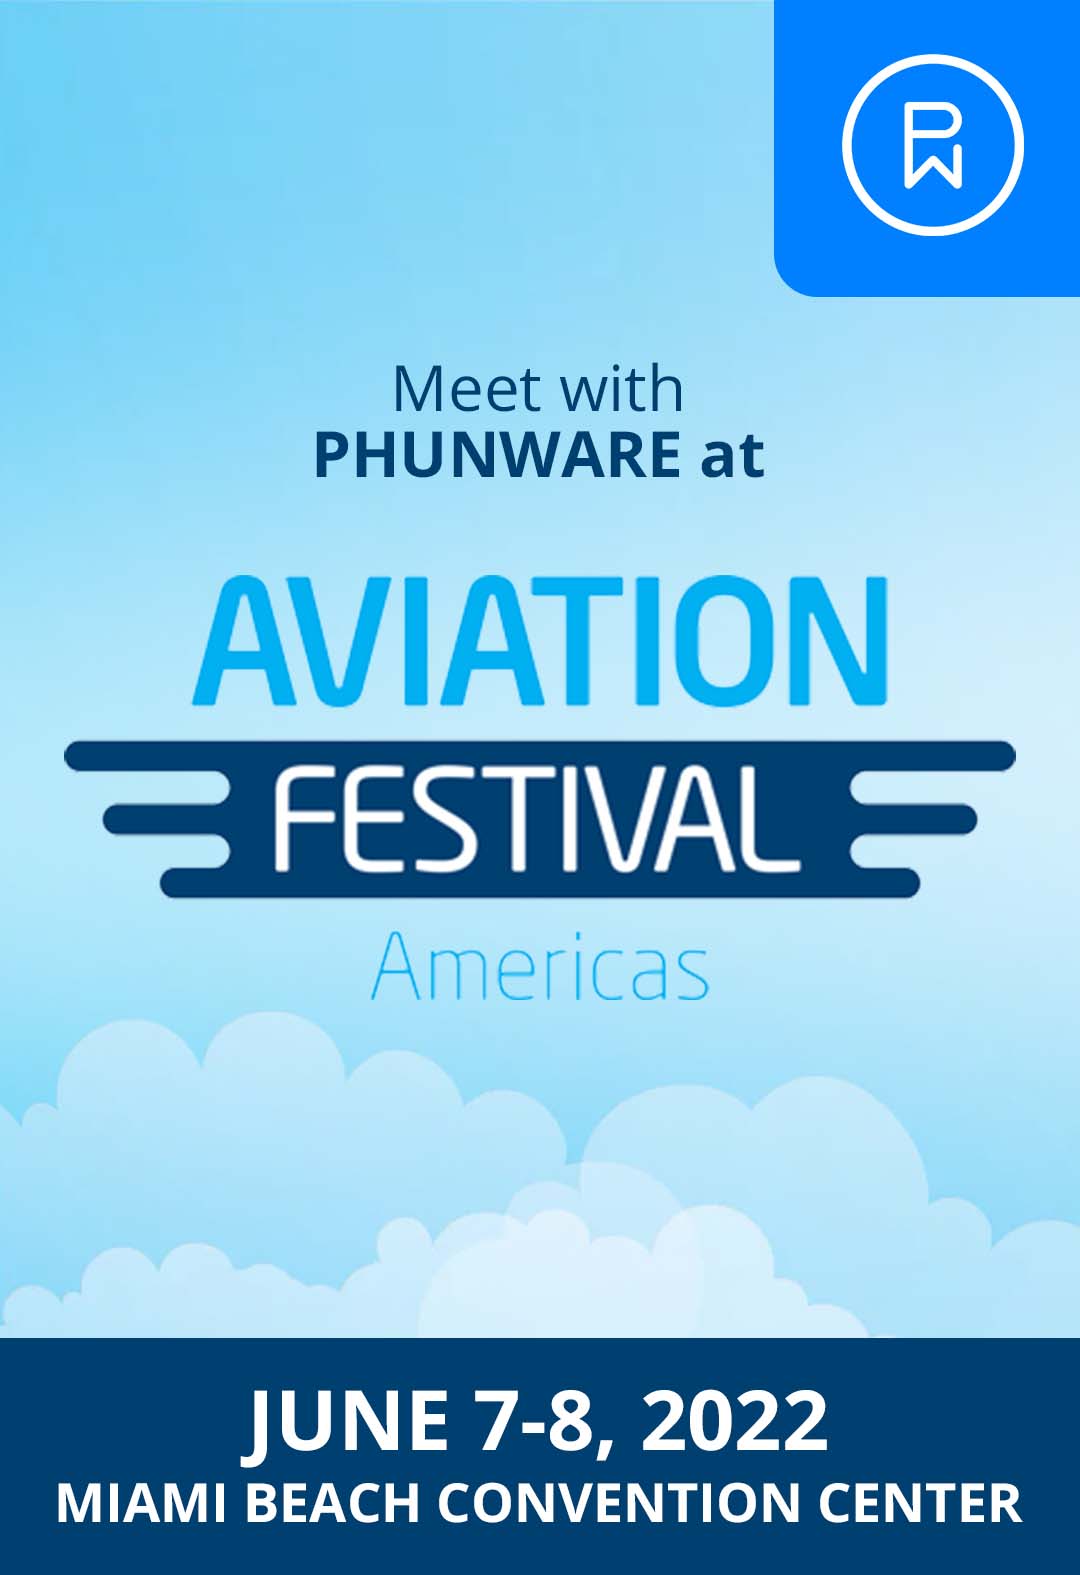 LP-Email-aviation-festival-americas-2022